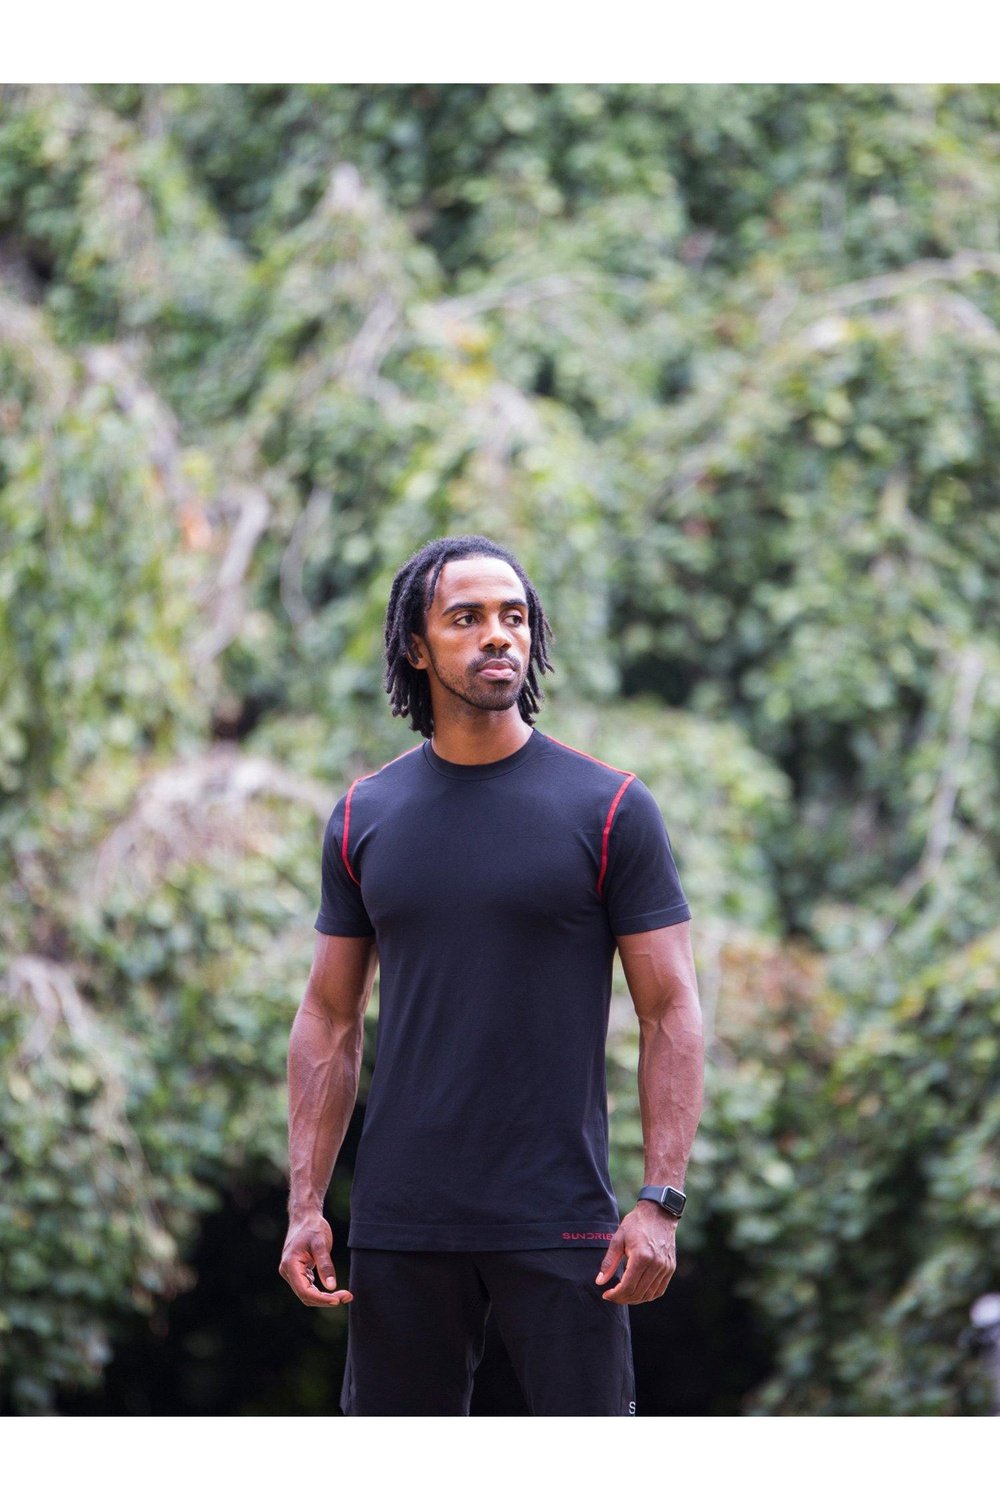 Sundried Eco Tech Men's Fitness Top T-Shirt Activewear